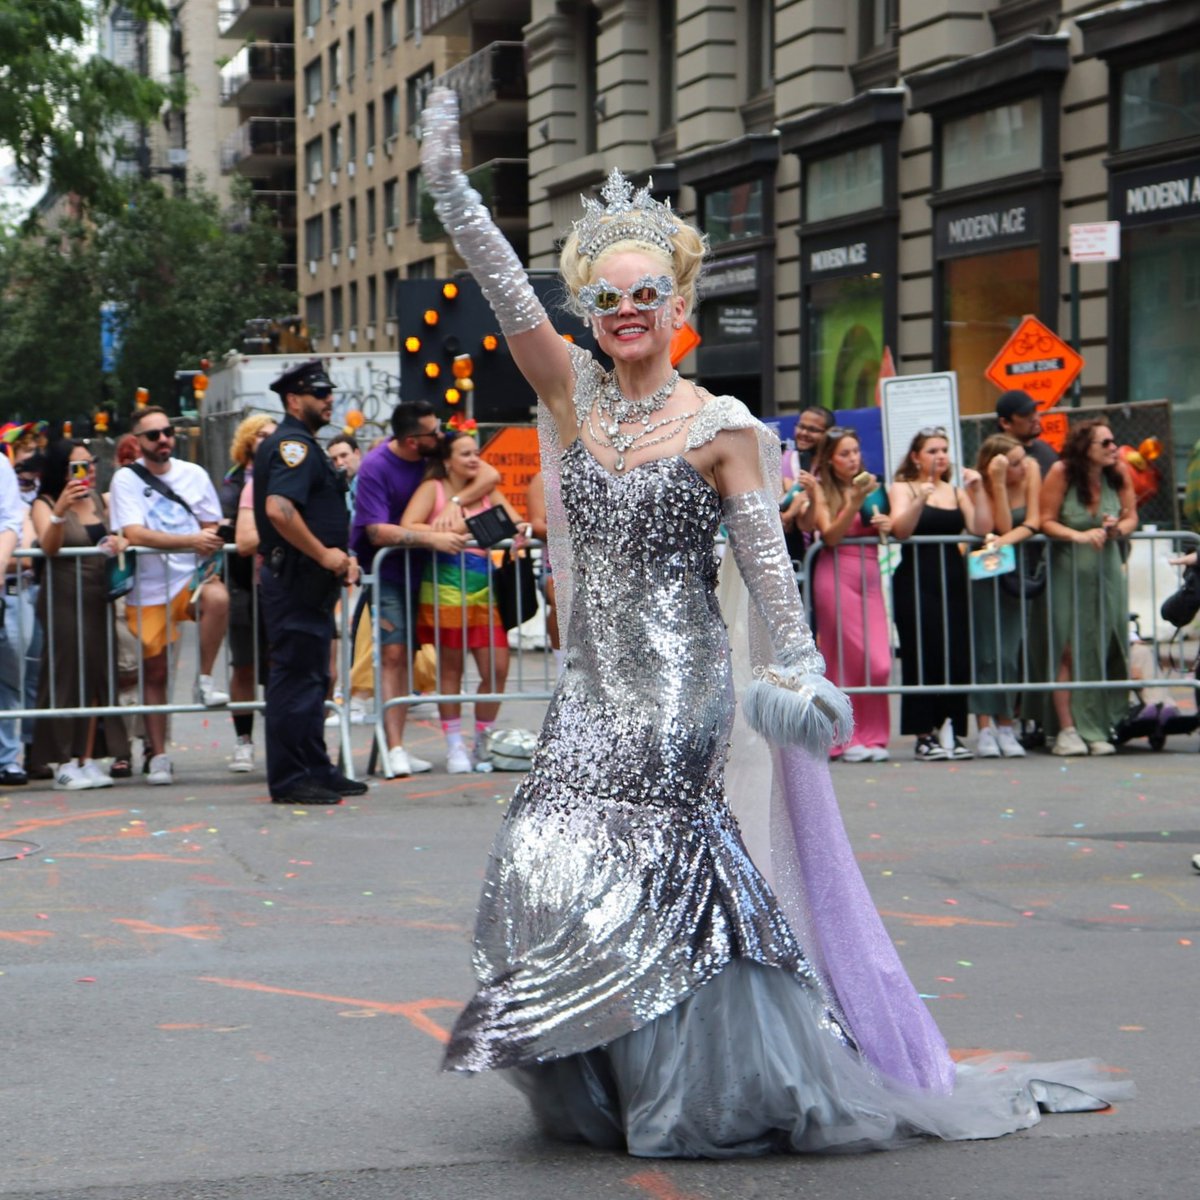 NYC Pride March, 5th Avenue,  6-25-2023

#pridemonth
#pride
#pride2023
#pridenyc
#prideparade
#nycpride2023
#nyc
#newyork
#newyorklife
#loveislovenyc #prideparadenyc #rainbowcity #pridefestnyc #celebratediversity #pridemonthnyc